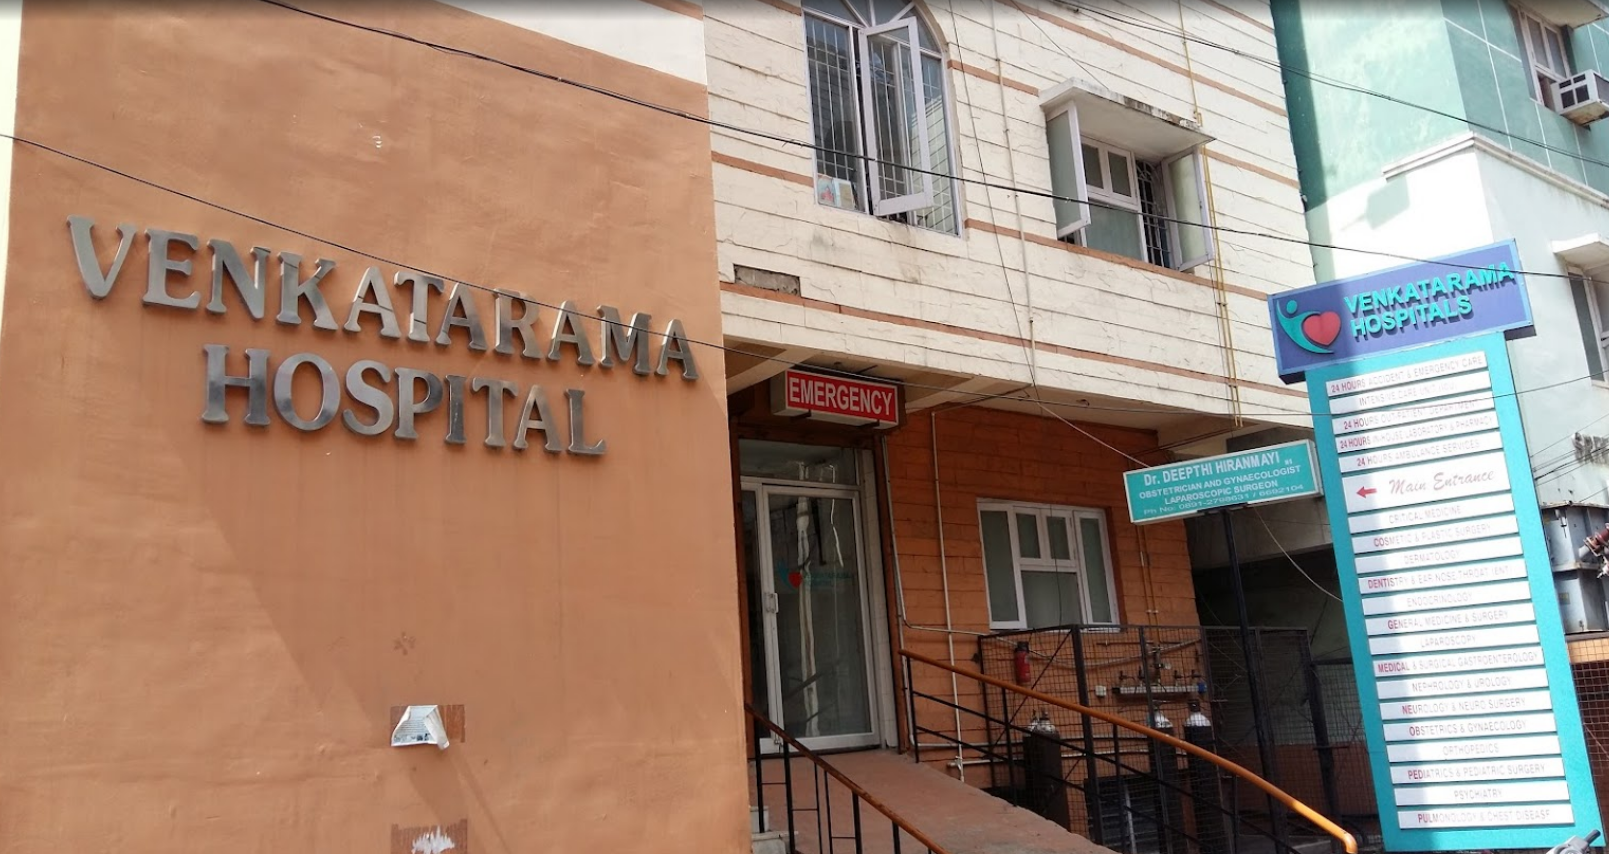 Venkatrama Hospital